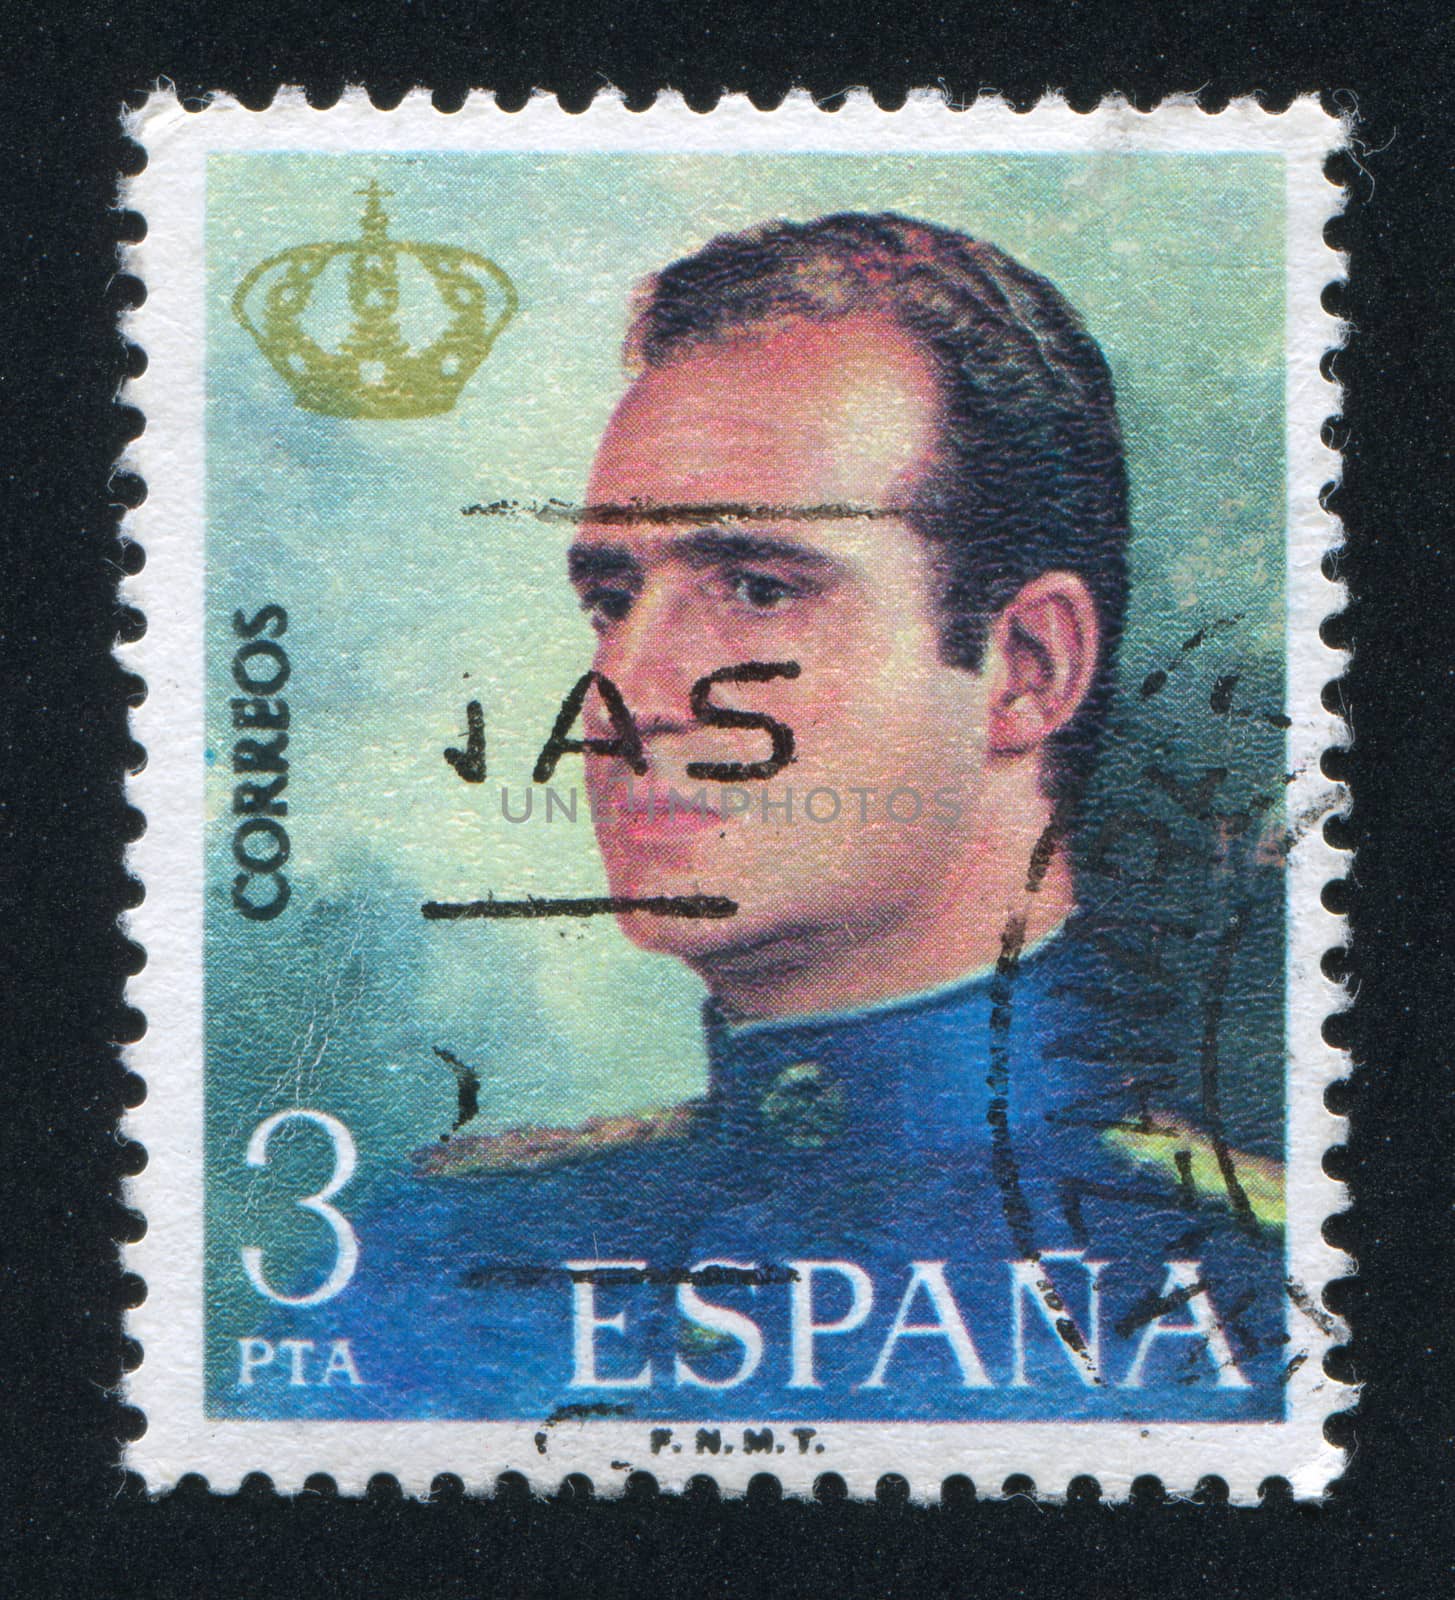 SPAIN - CIRCA 1975: stamp printed by Spain, shows King Juan Carlos I, circa 1975